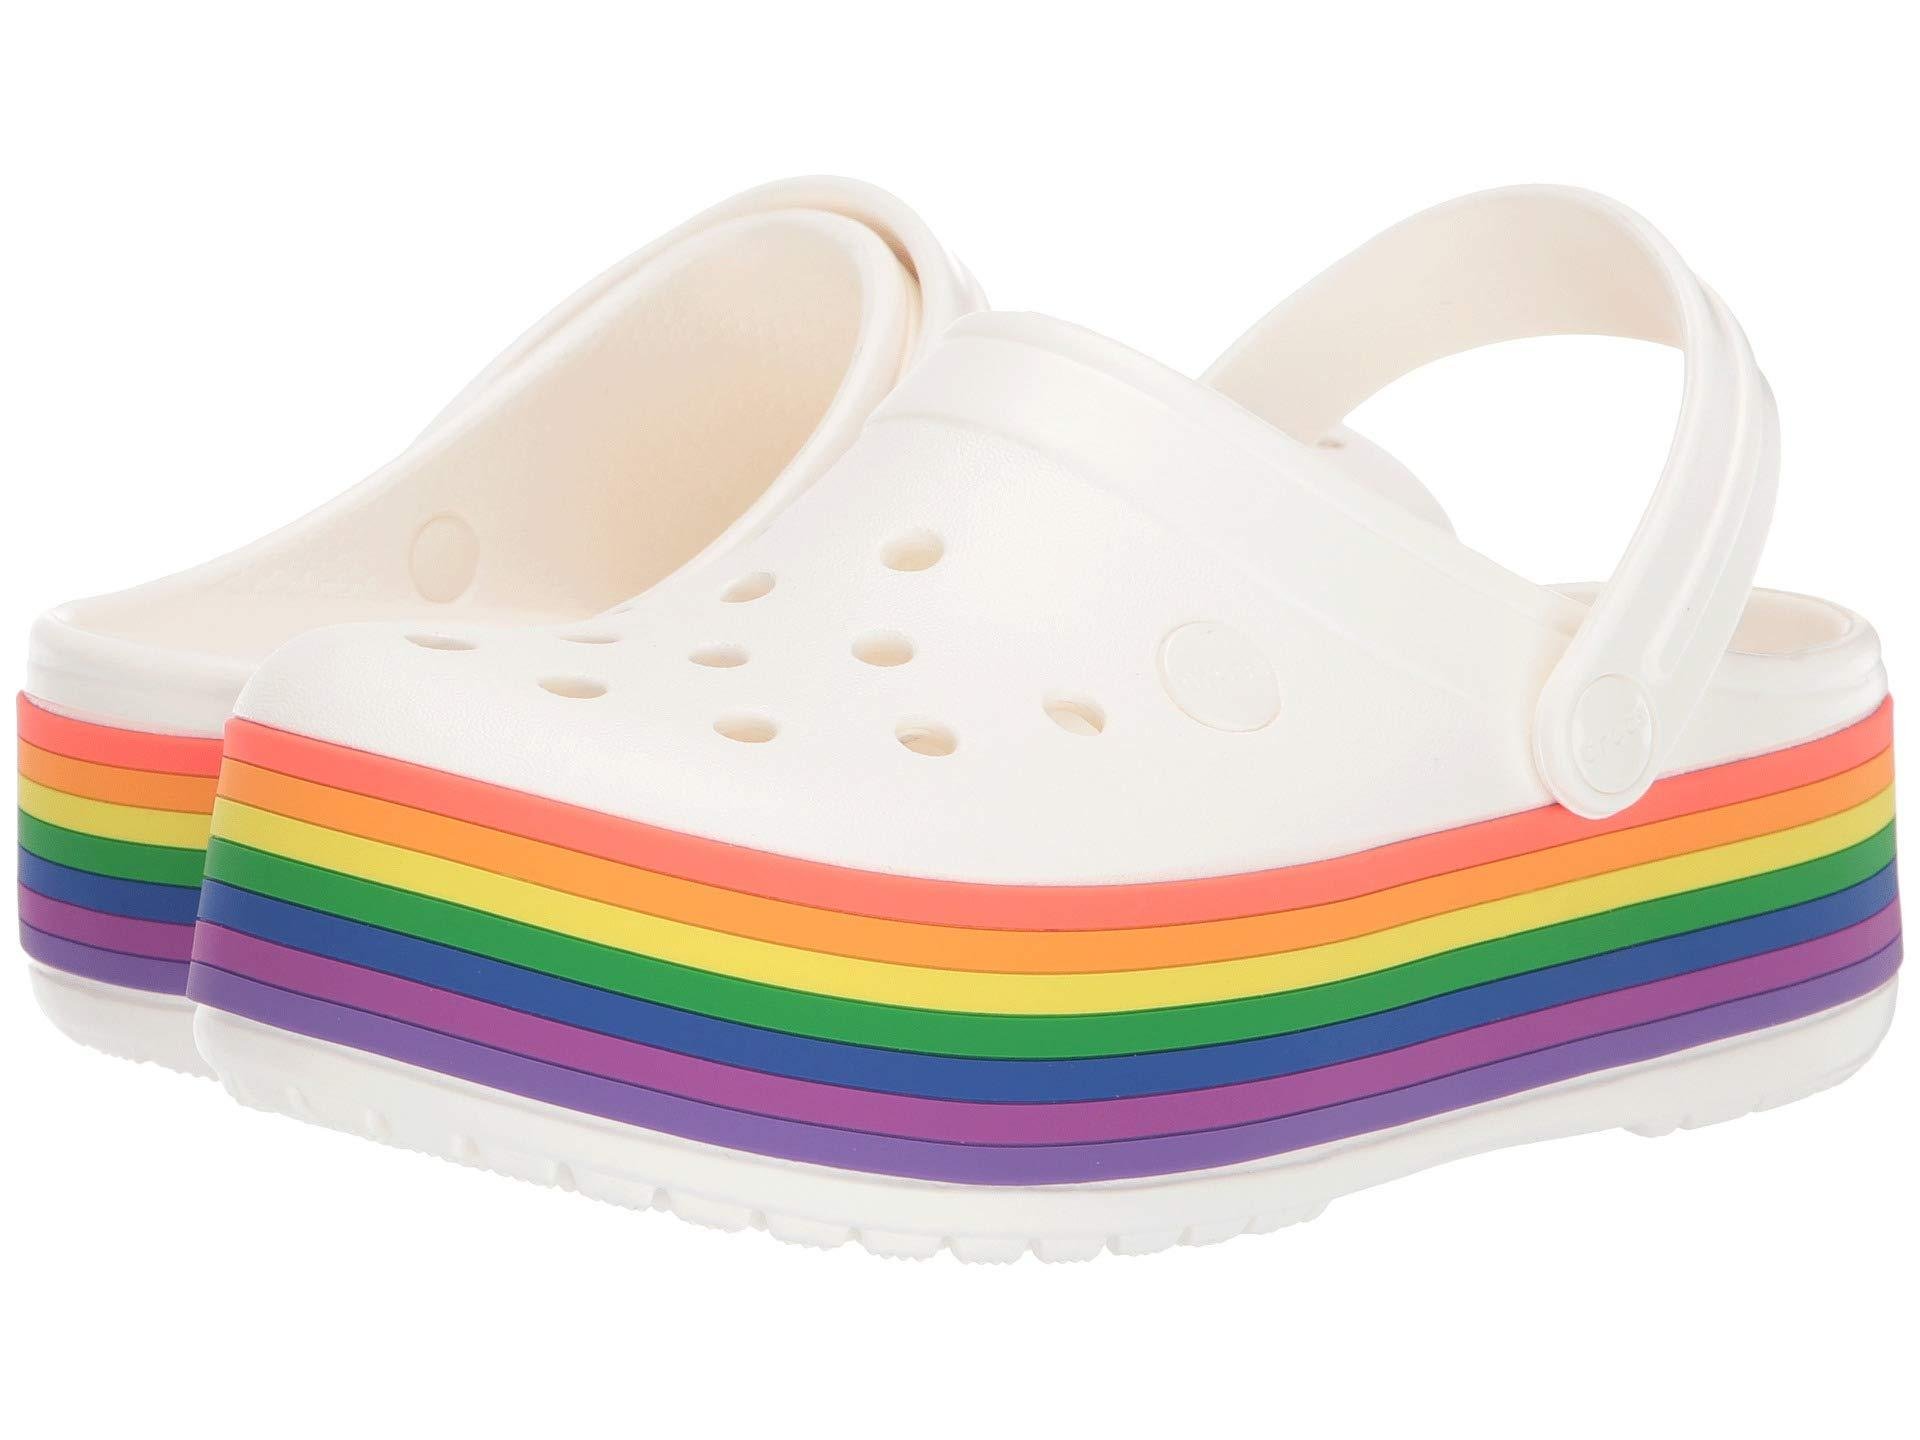 crocs multicolor sandals